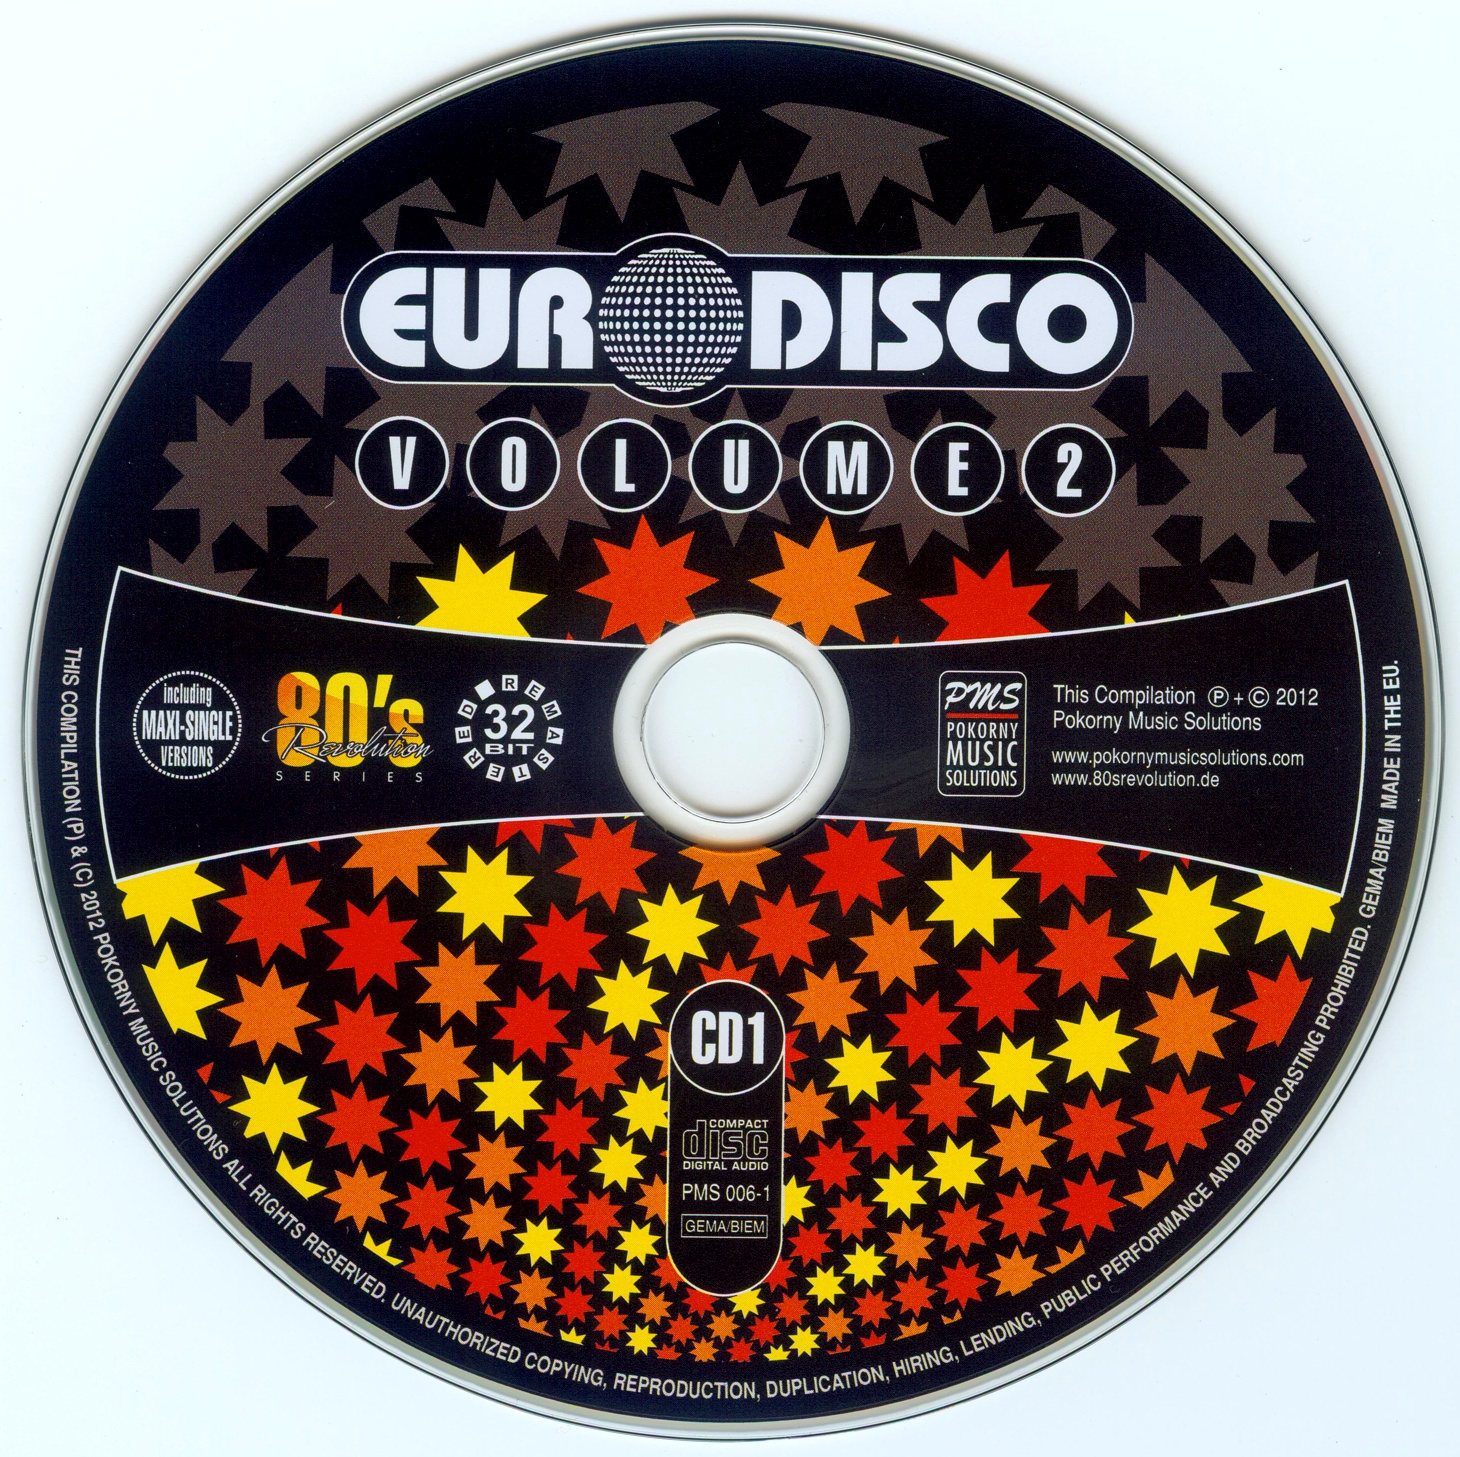 Итальянский диско слушать. Диск Crazy Disco 80s. Disco обложка. Mp3-диск евро-диско 80-х. Сборник диско на CD.